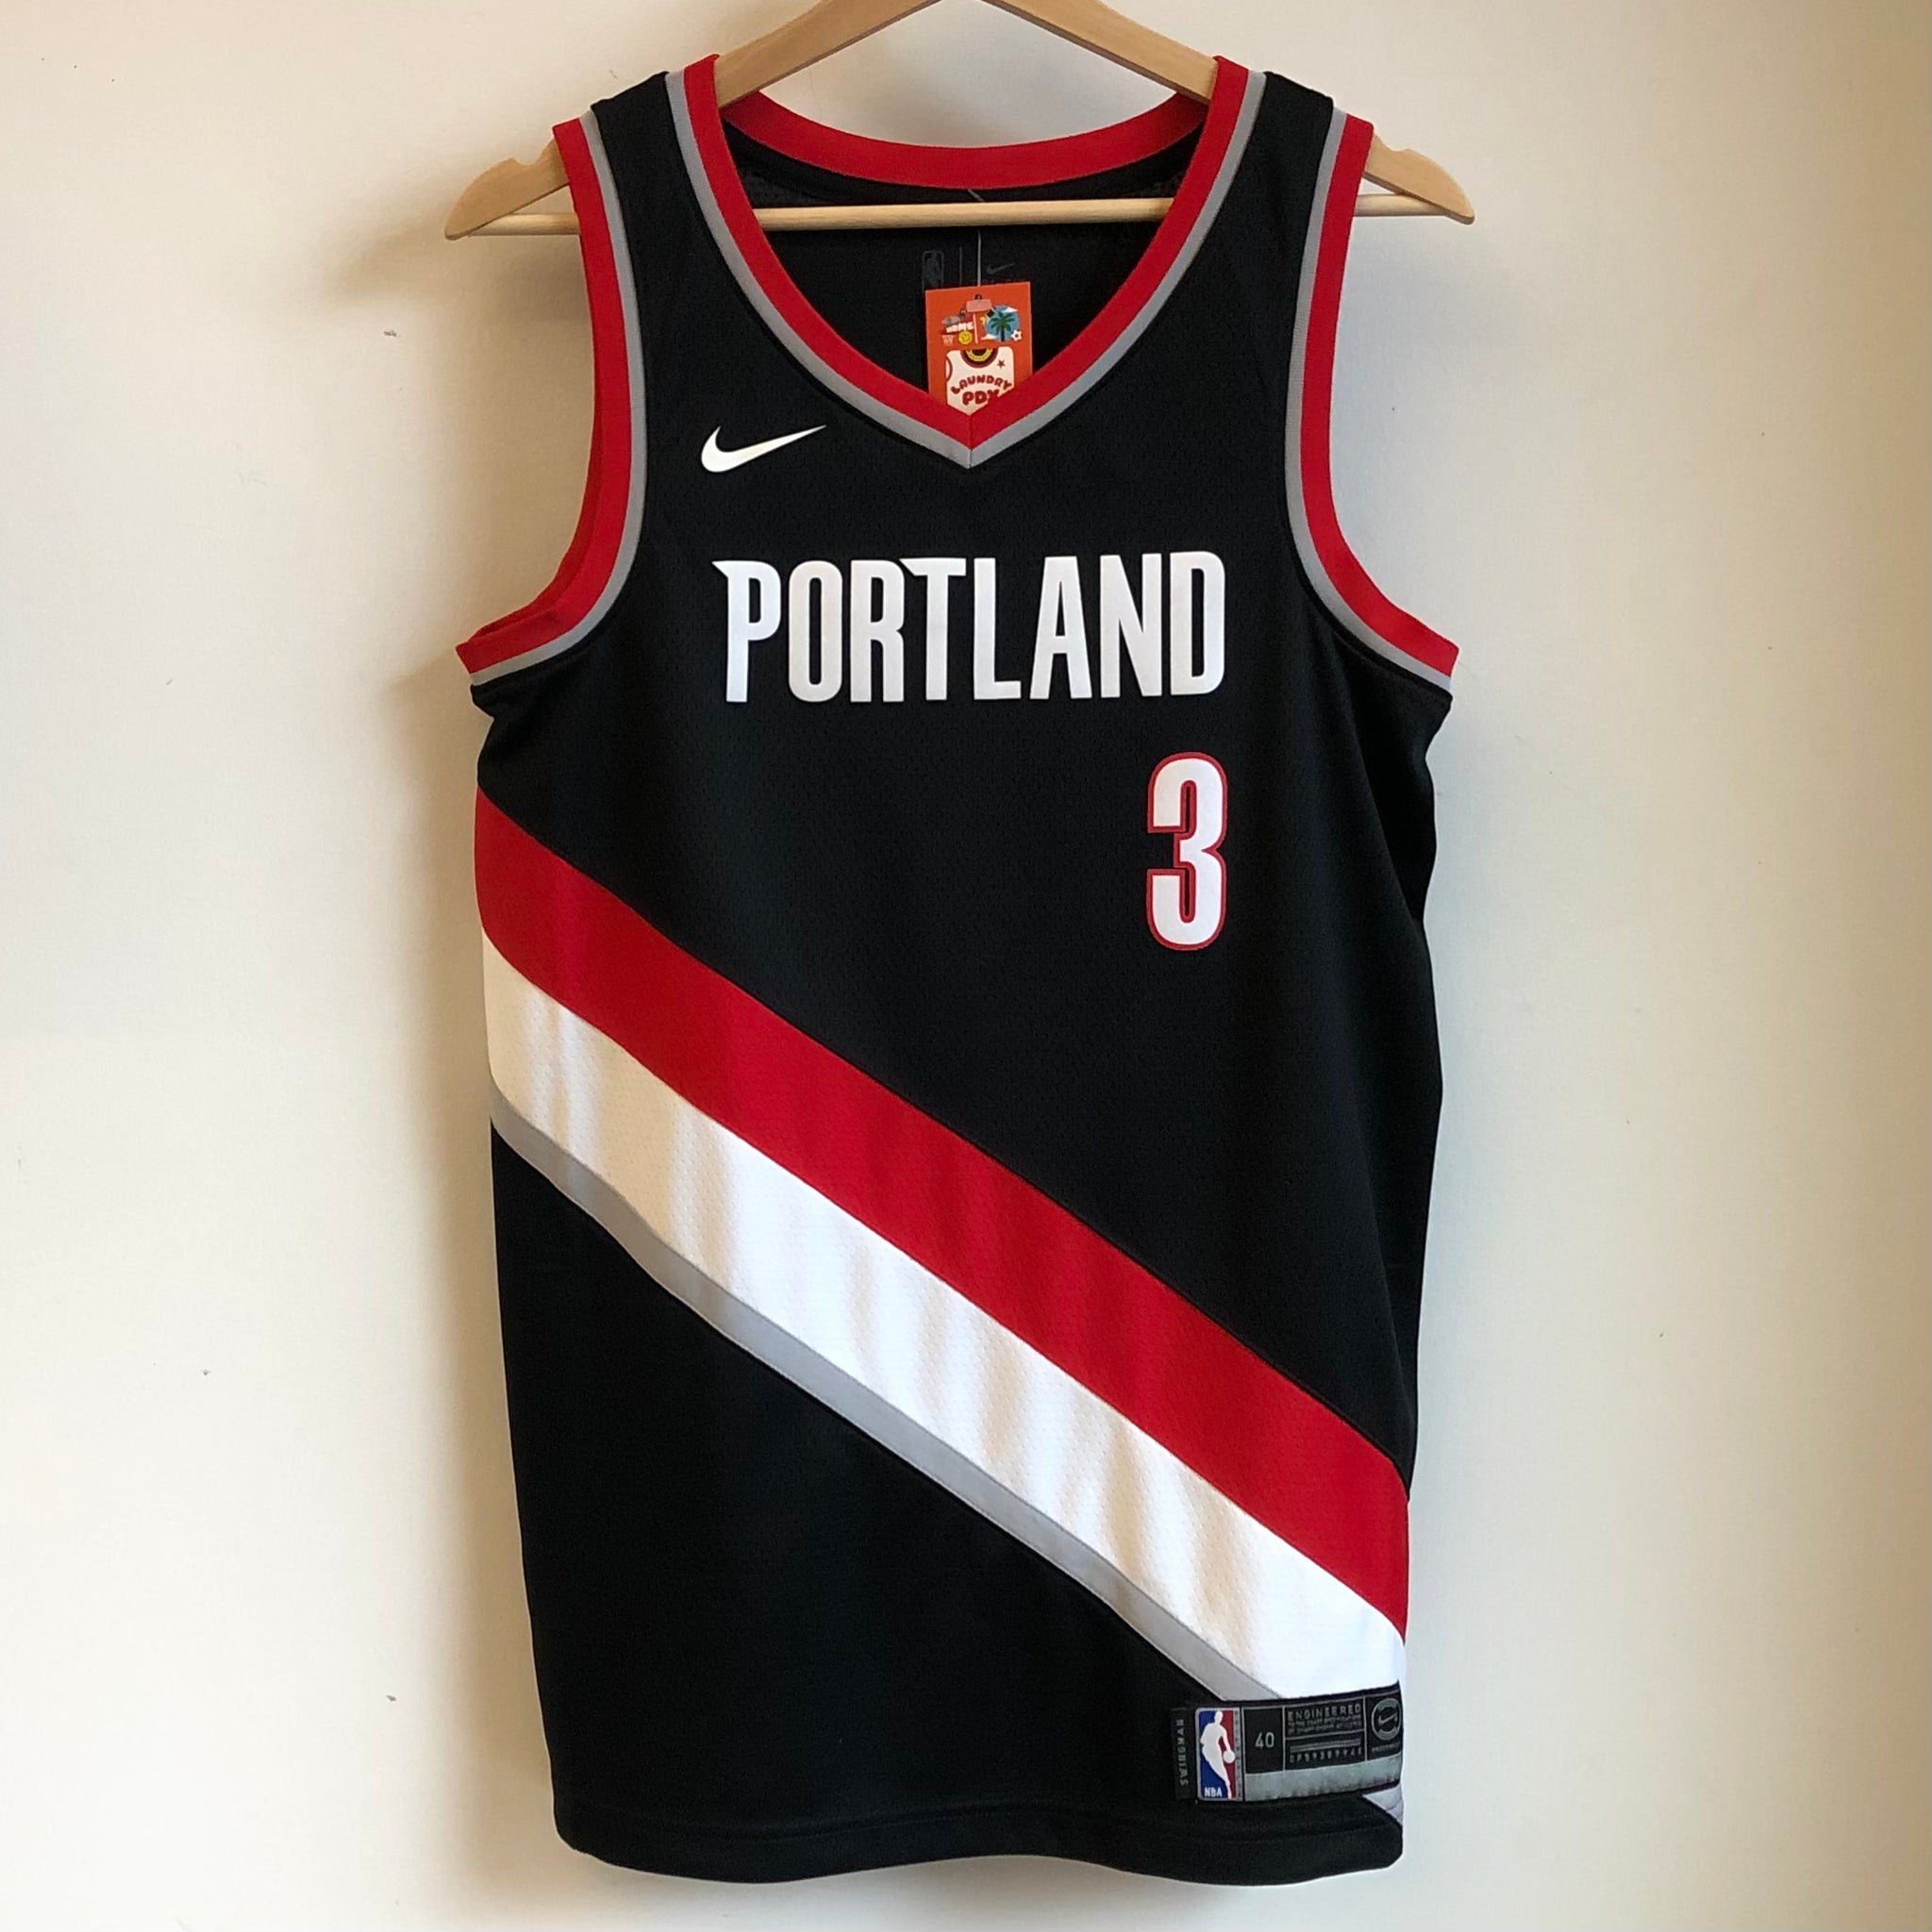 Portland Trail Blazers City Edition jerseys on sale: Where to buy